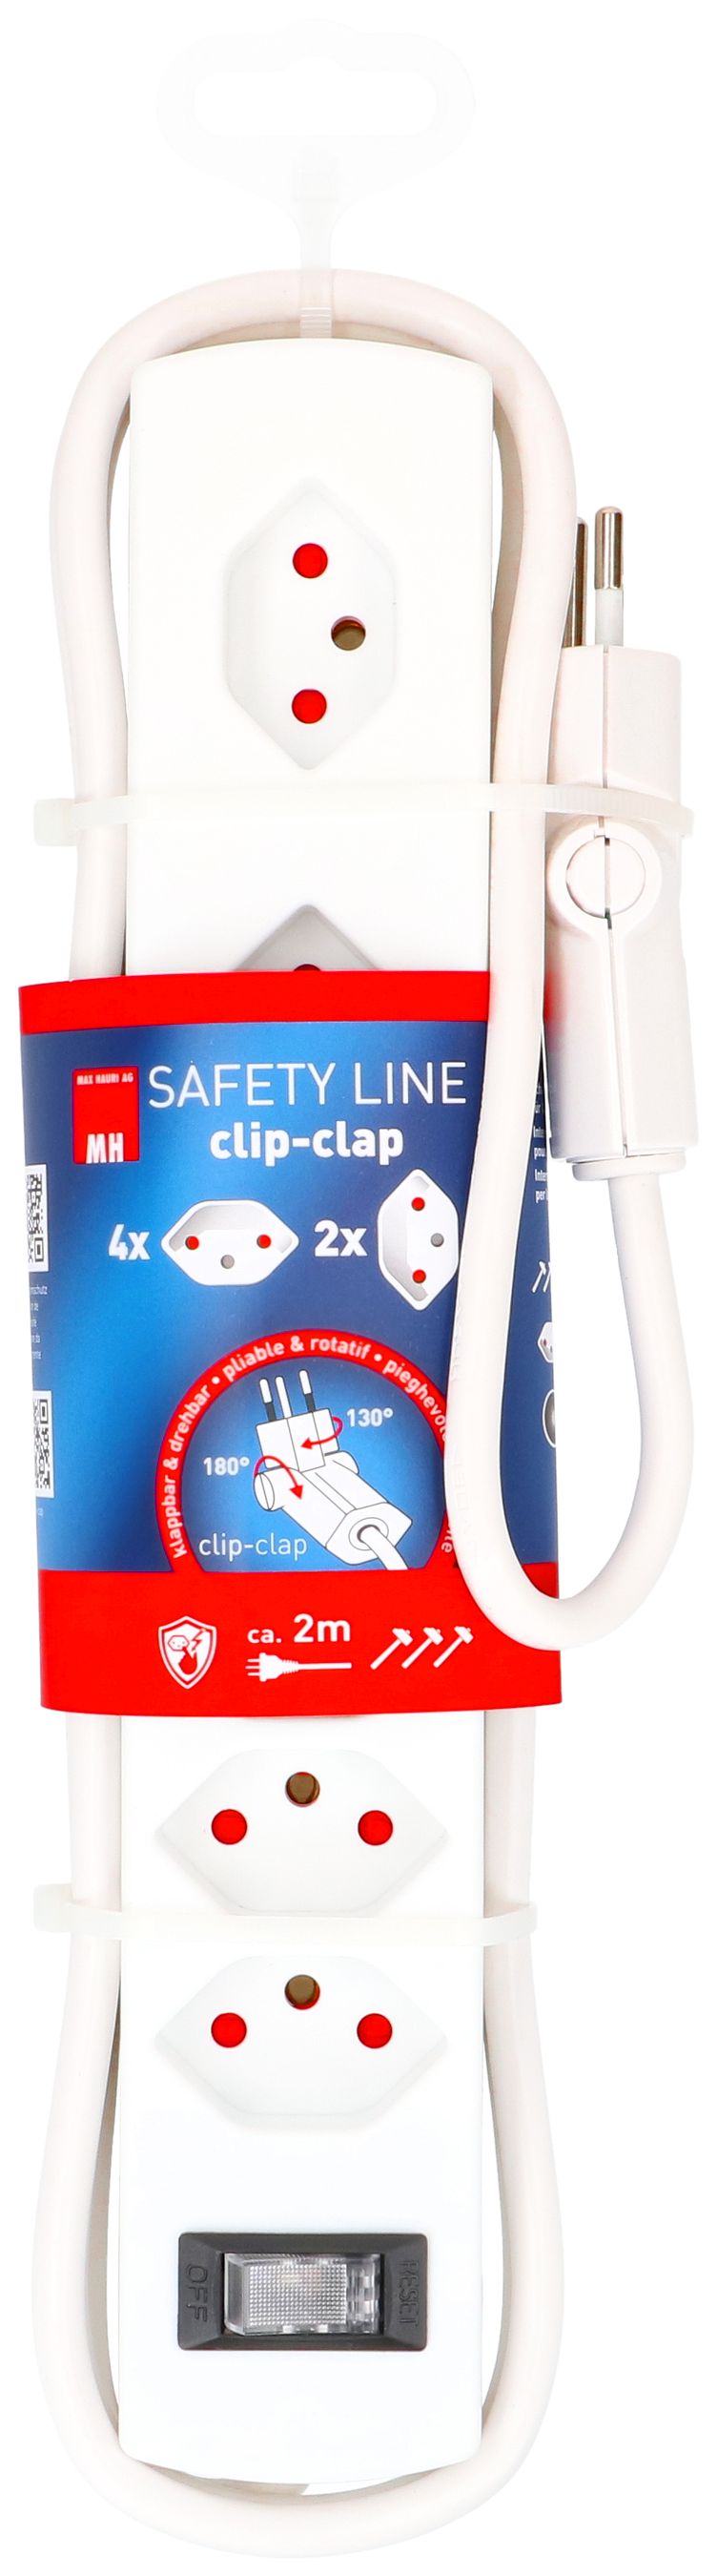 multipresa Safety Line 6x tipo 13 2x 90° BS bi interr. 2m cli.